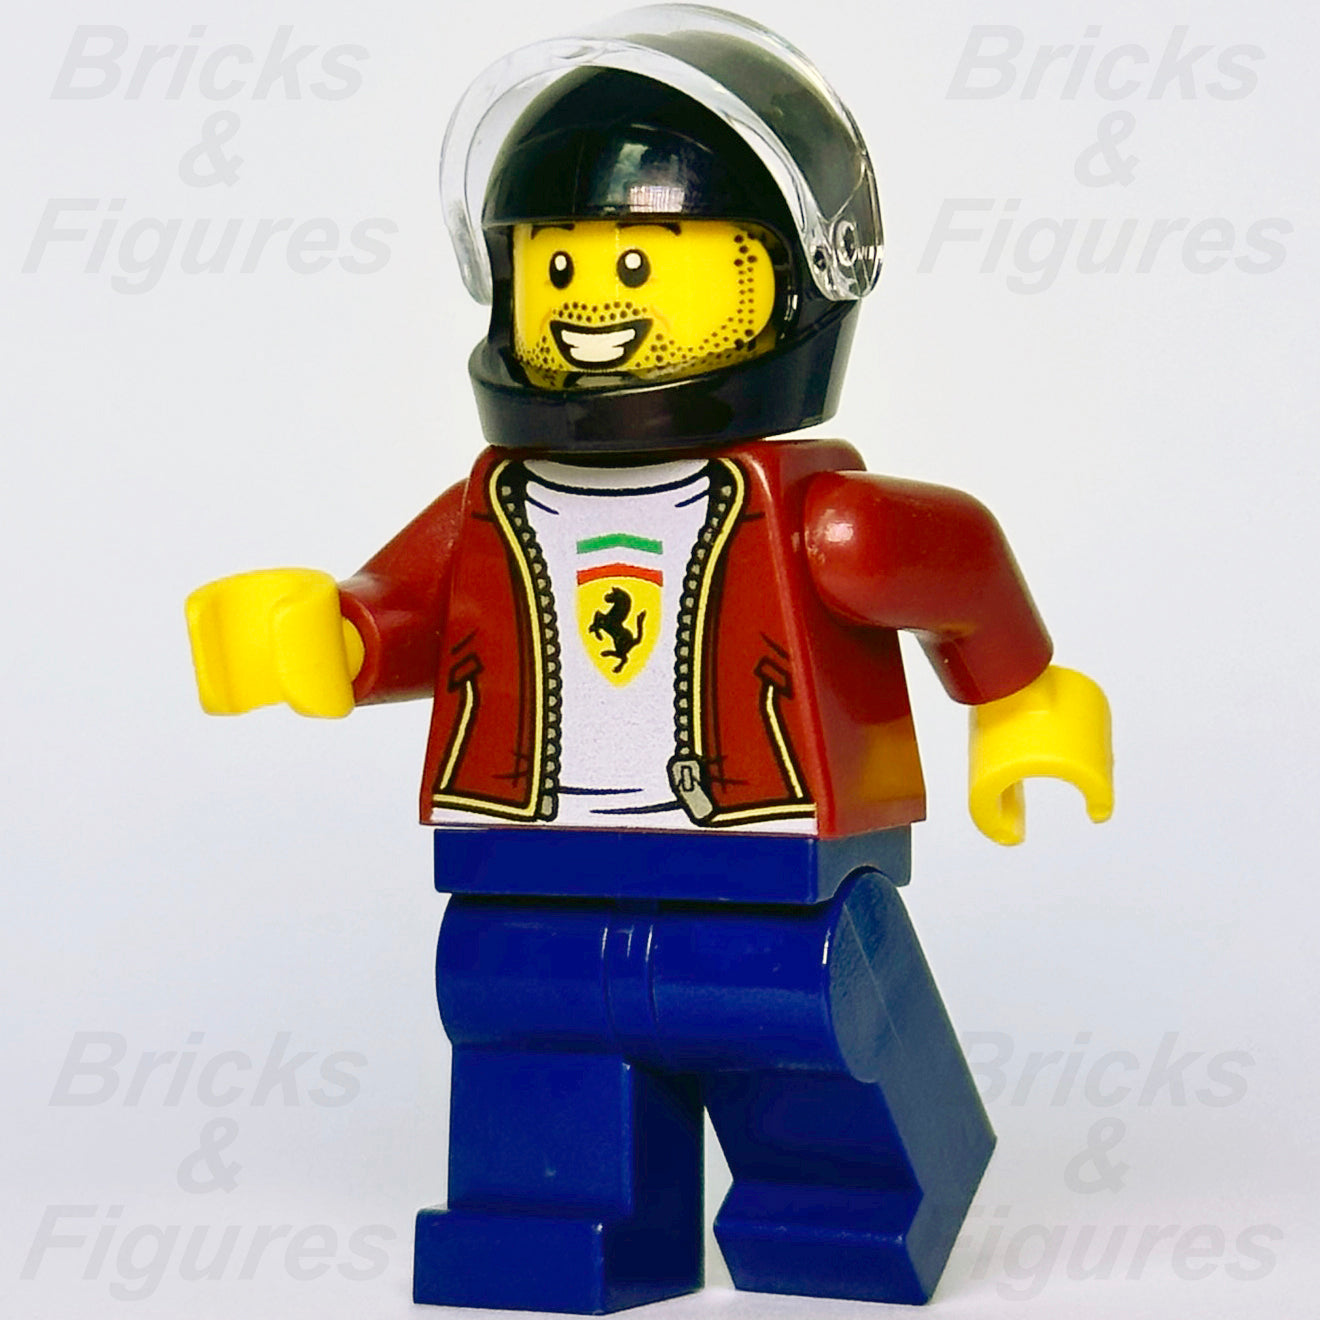 LEGO Speed Champions Minifigures